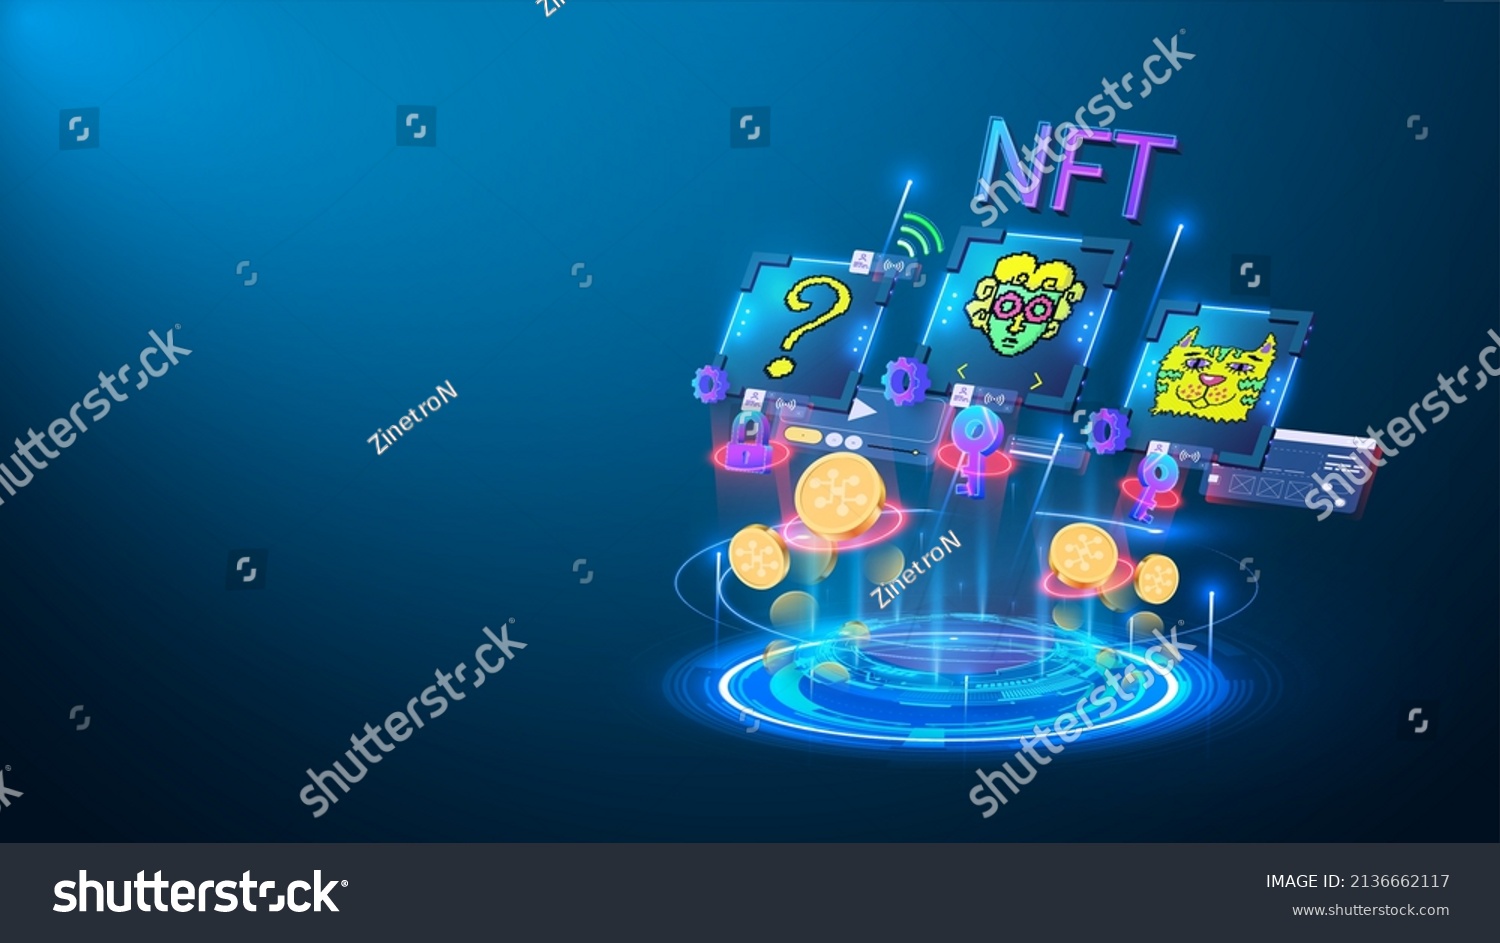 SVG of NFT token in artwork. Platform showing NET crypto art hologram. NFT token in blockchain technology in digital crypto art. Pixel art cryptopunks monkey, question and character set. Conceptual banner. svg